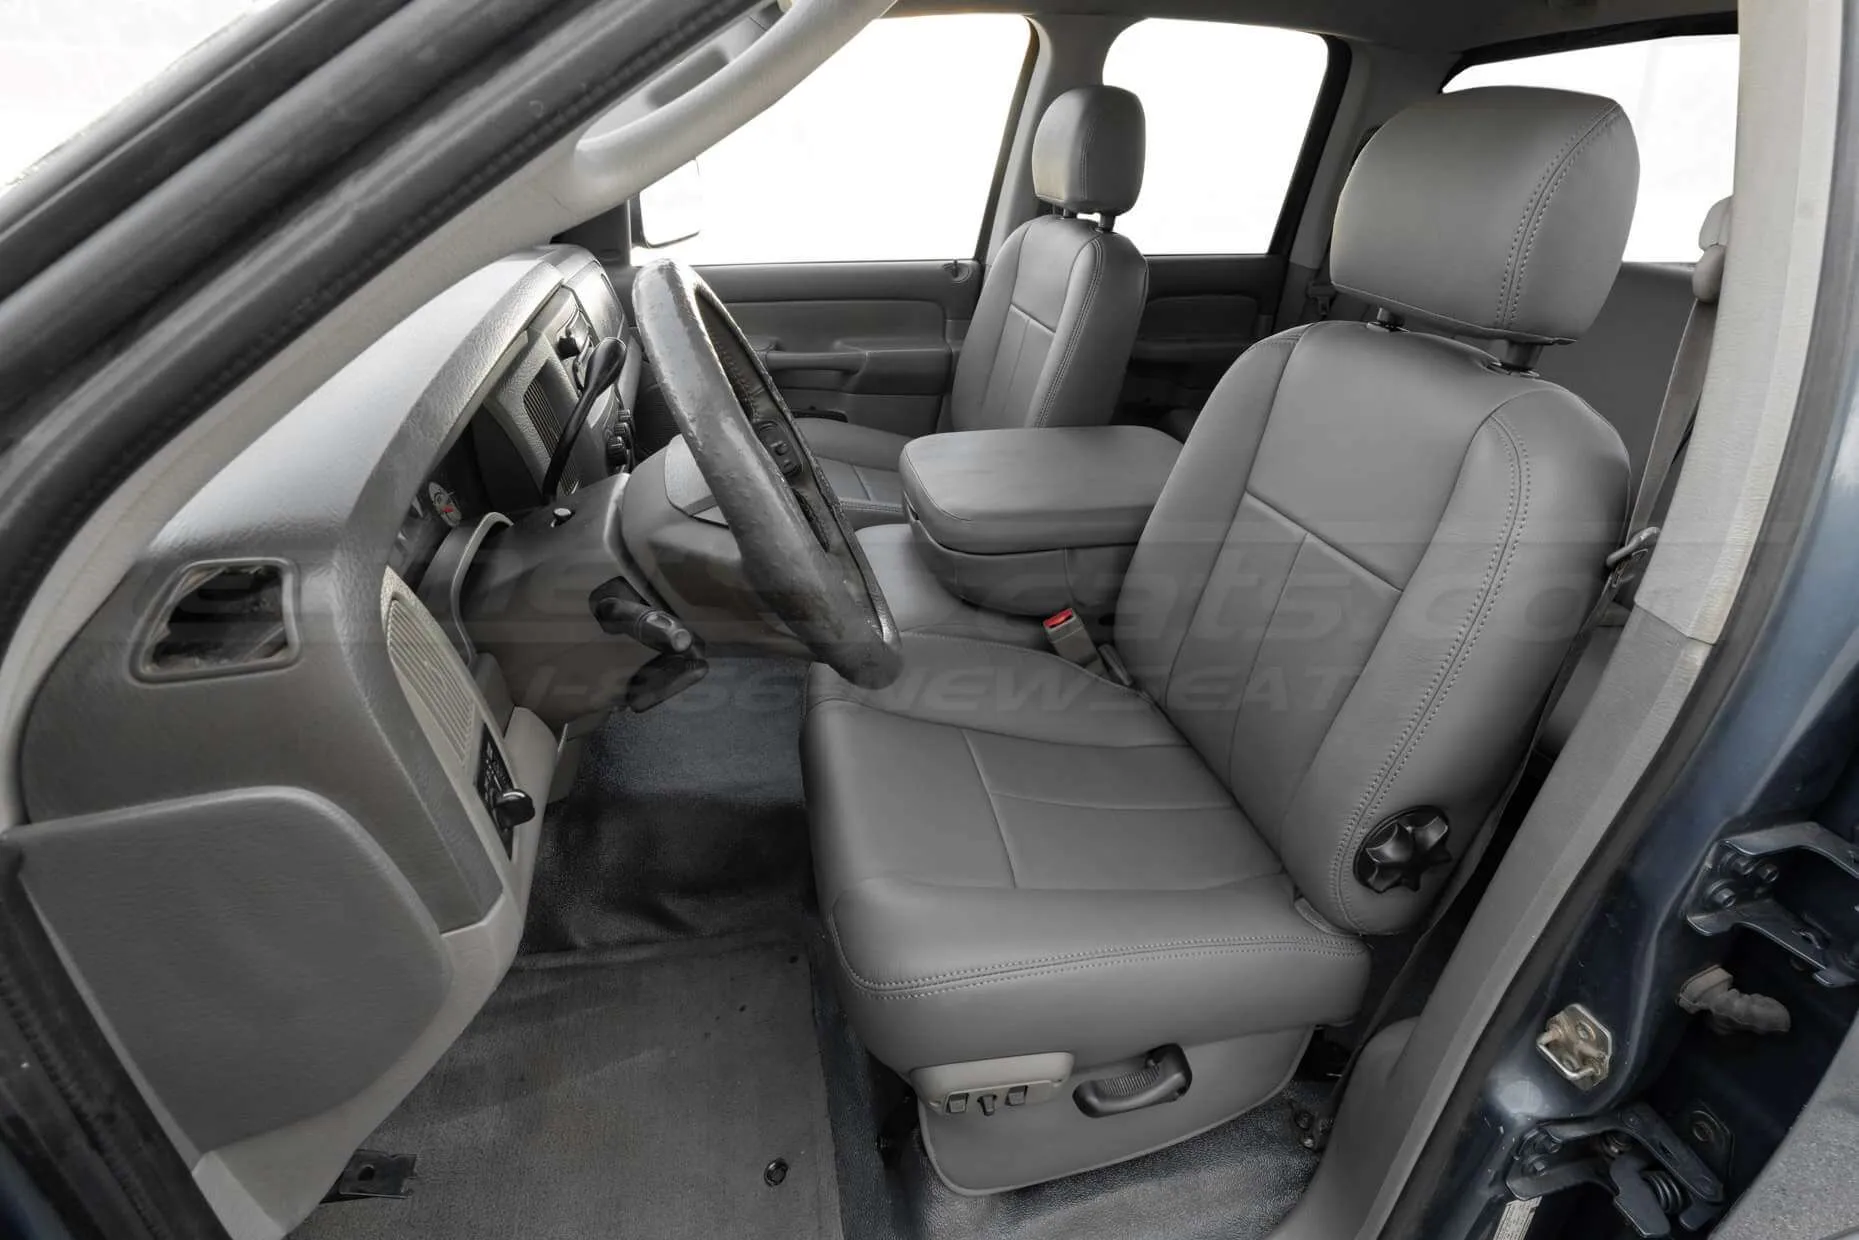 02-05 Dodge Ram Quad Cab with Light Grey LeatherSeats.com installed interior